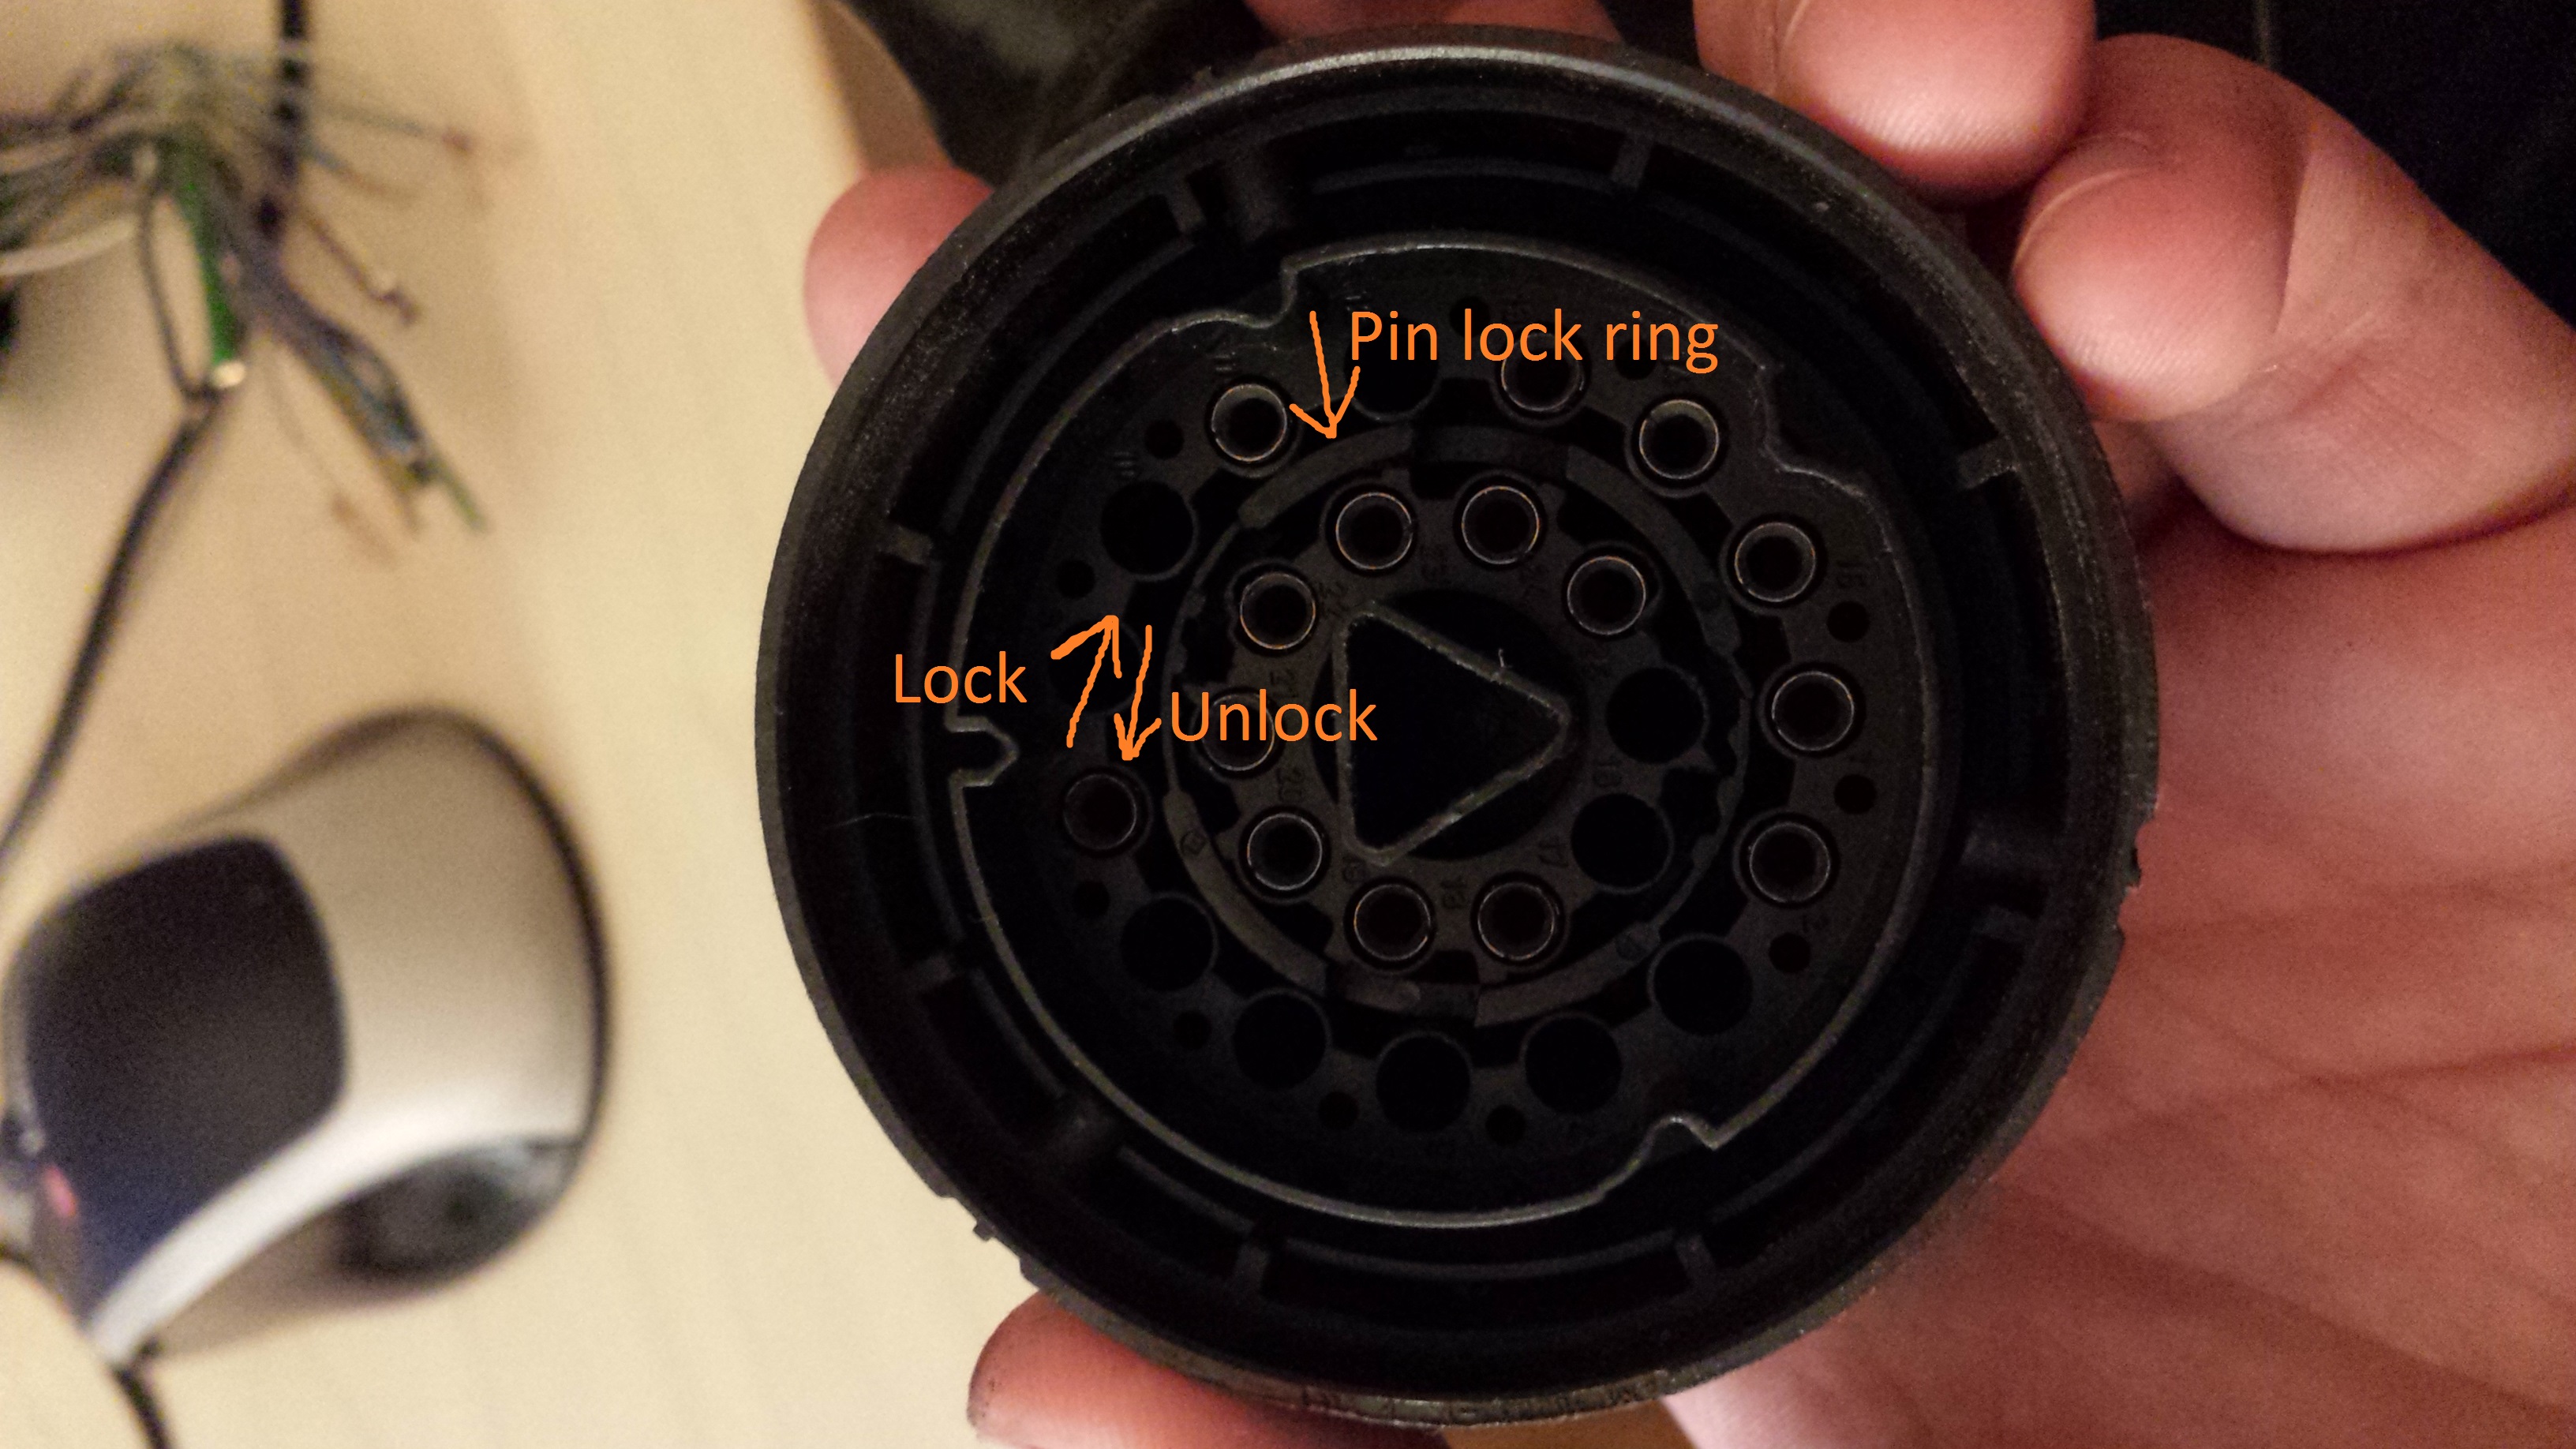 X20 Pin lock rink